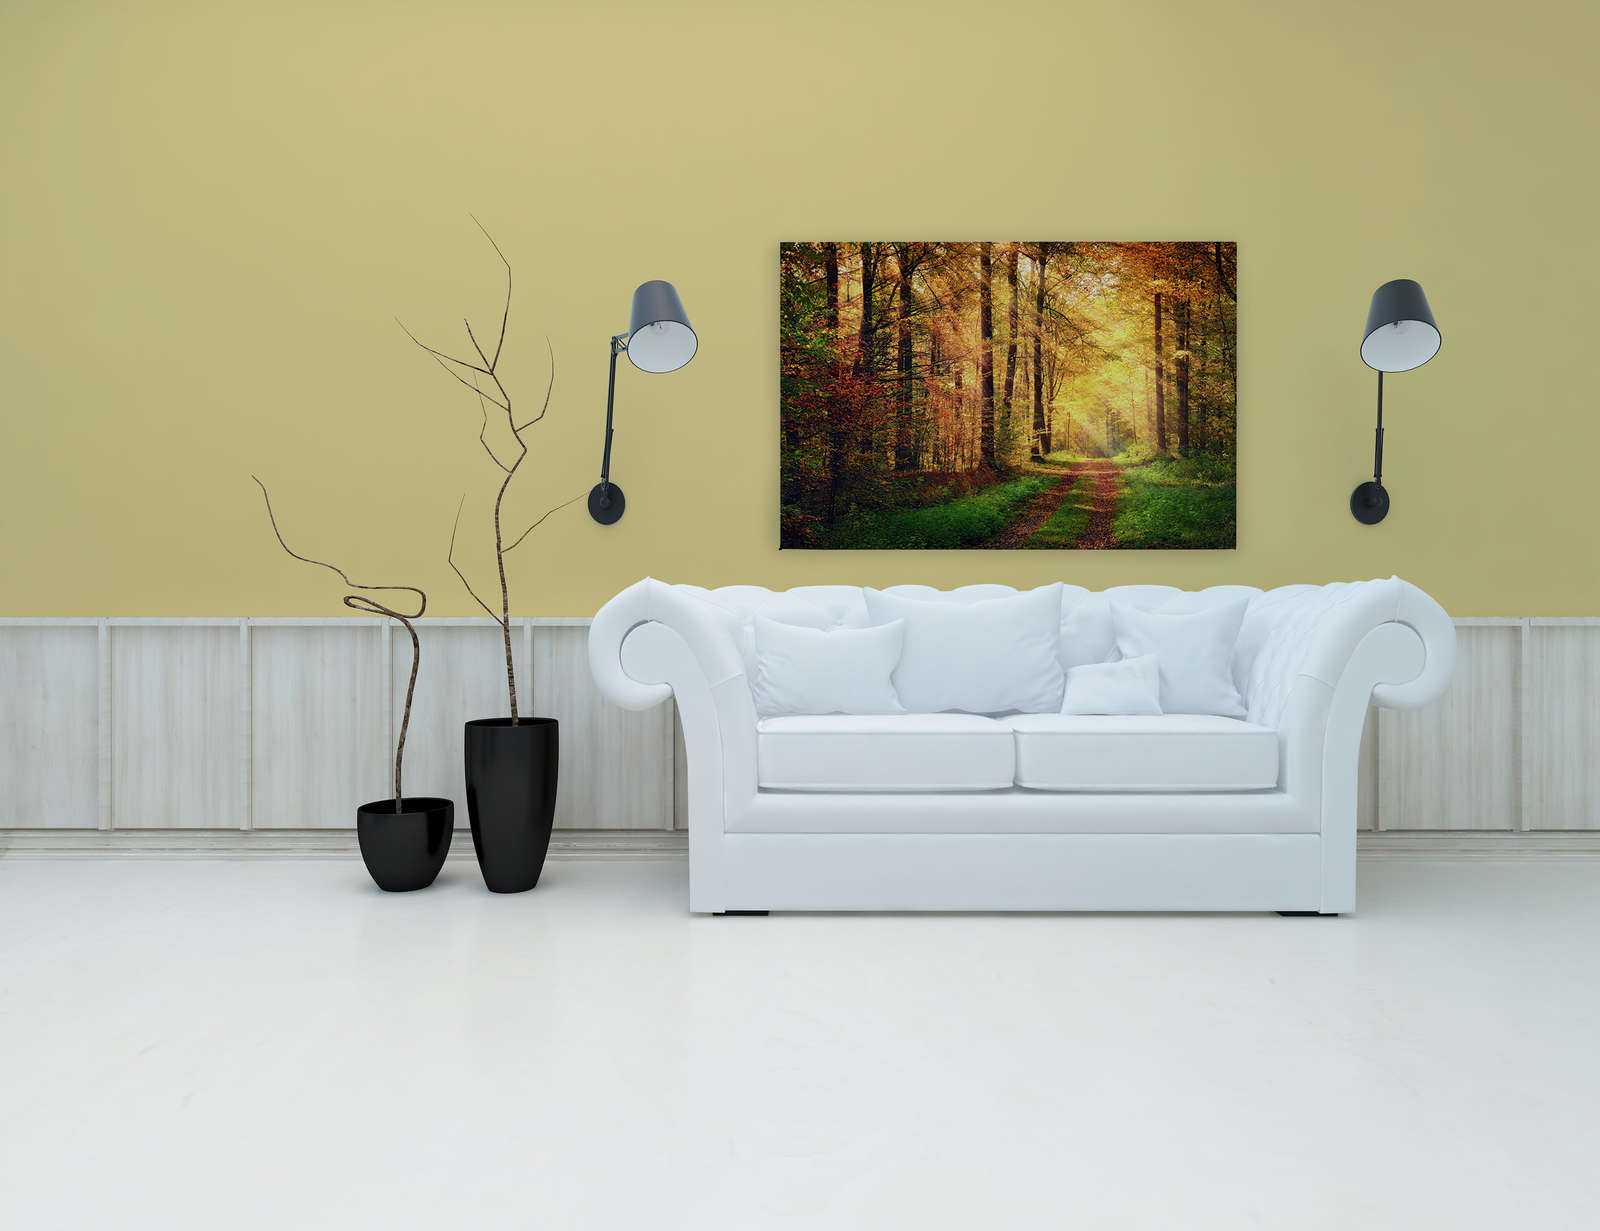             Autumn Morning Canvas Painting Deciduous Forest - 1.20 m x 0.80 m
        